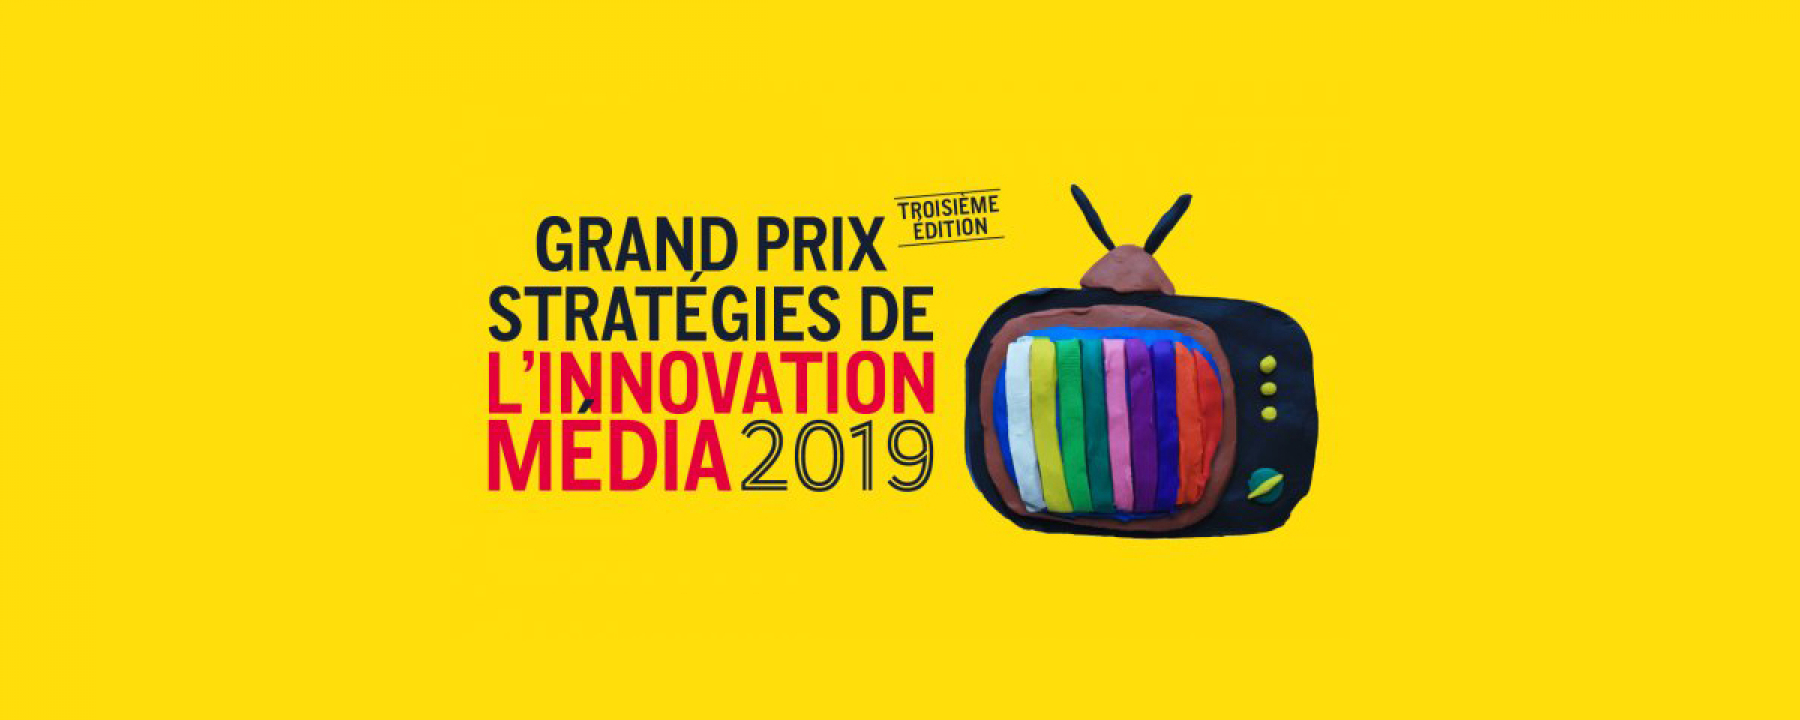 GP strategie innovation media